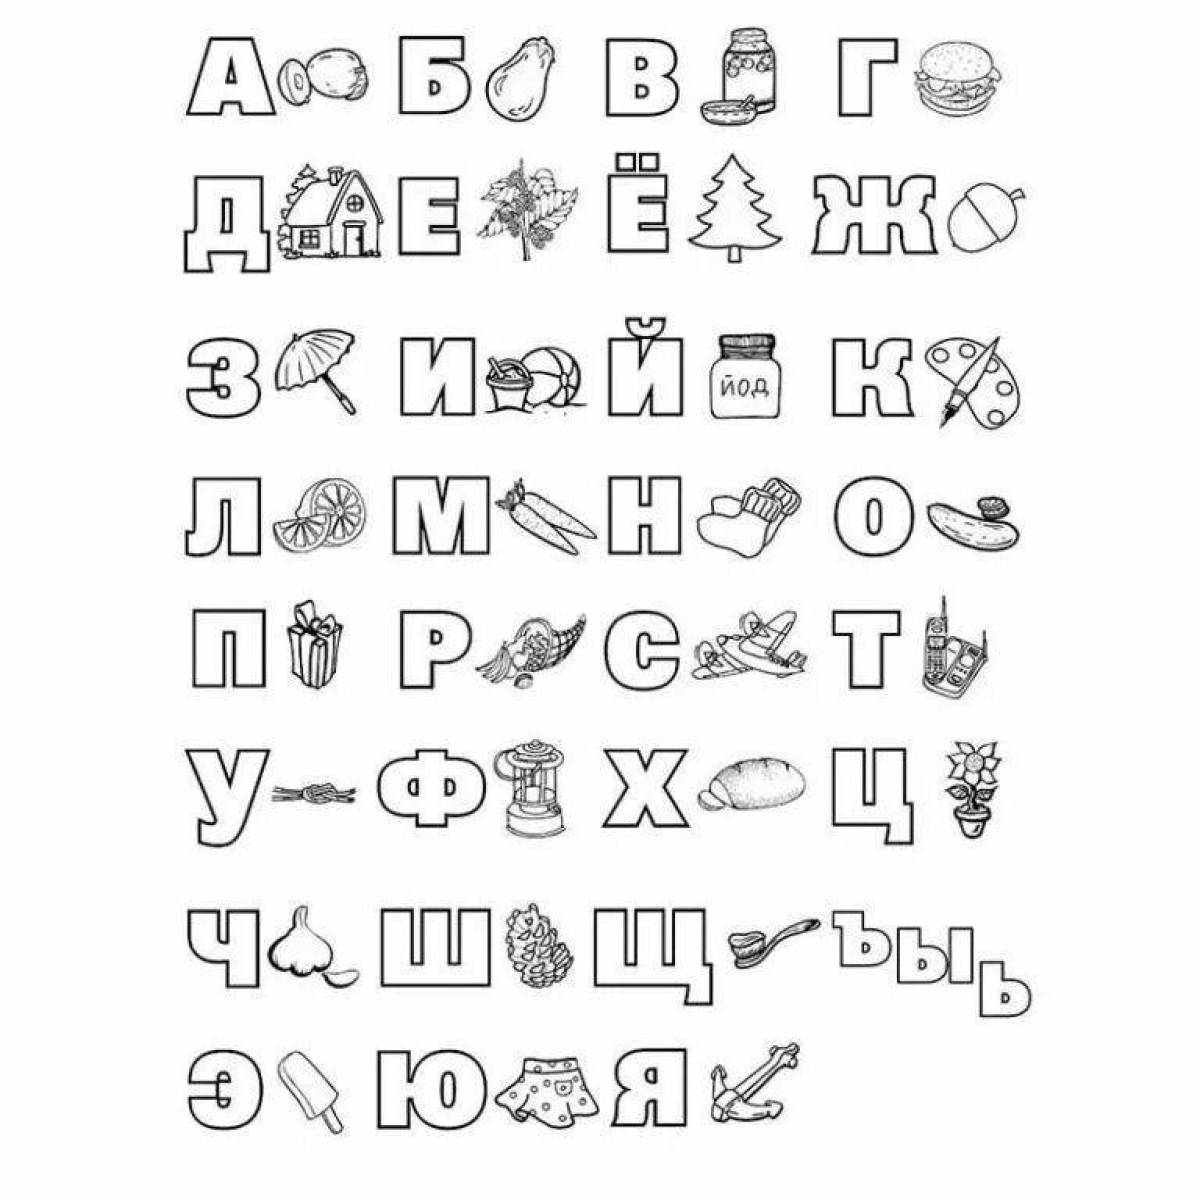 For kids alphabet letters #15